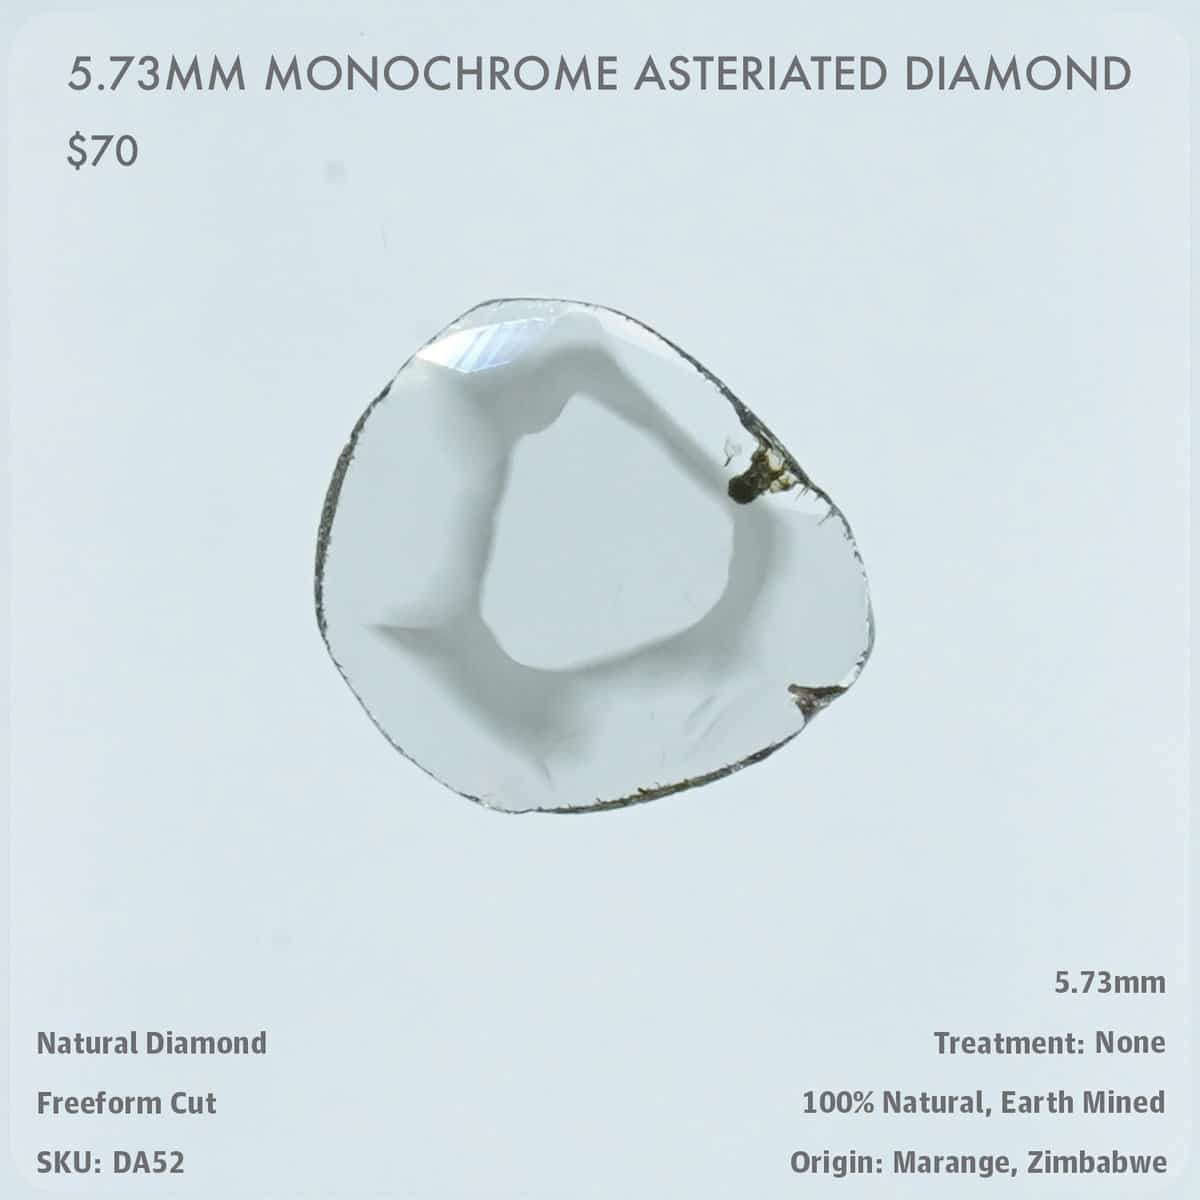 5.73mm Monochrome Asteriated Diamond